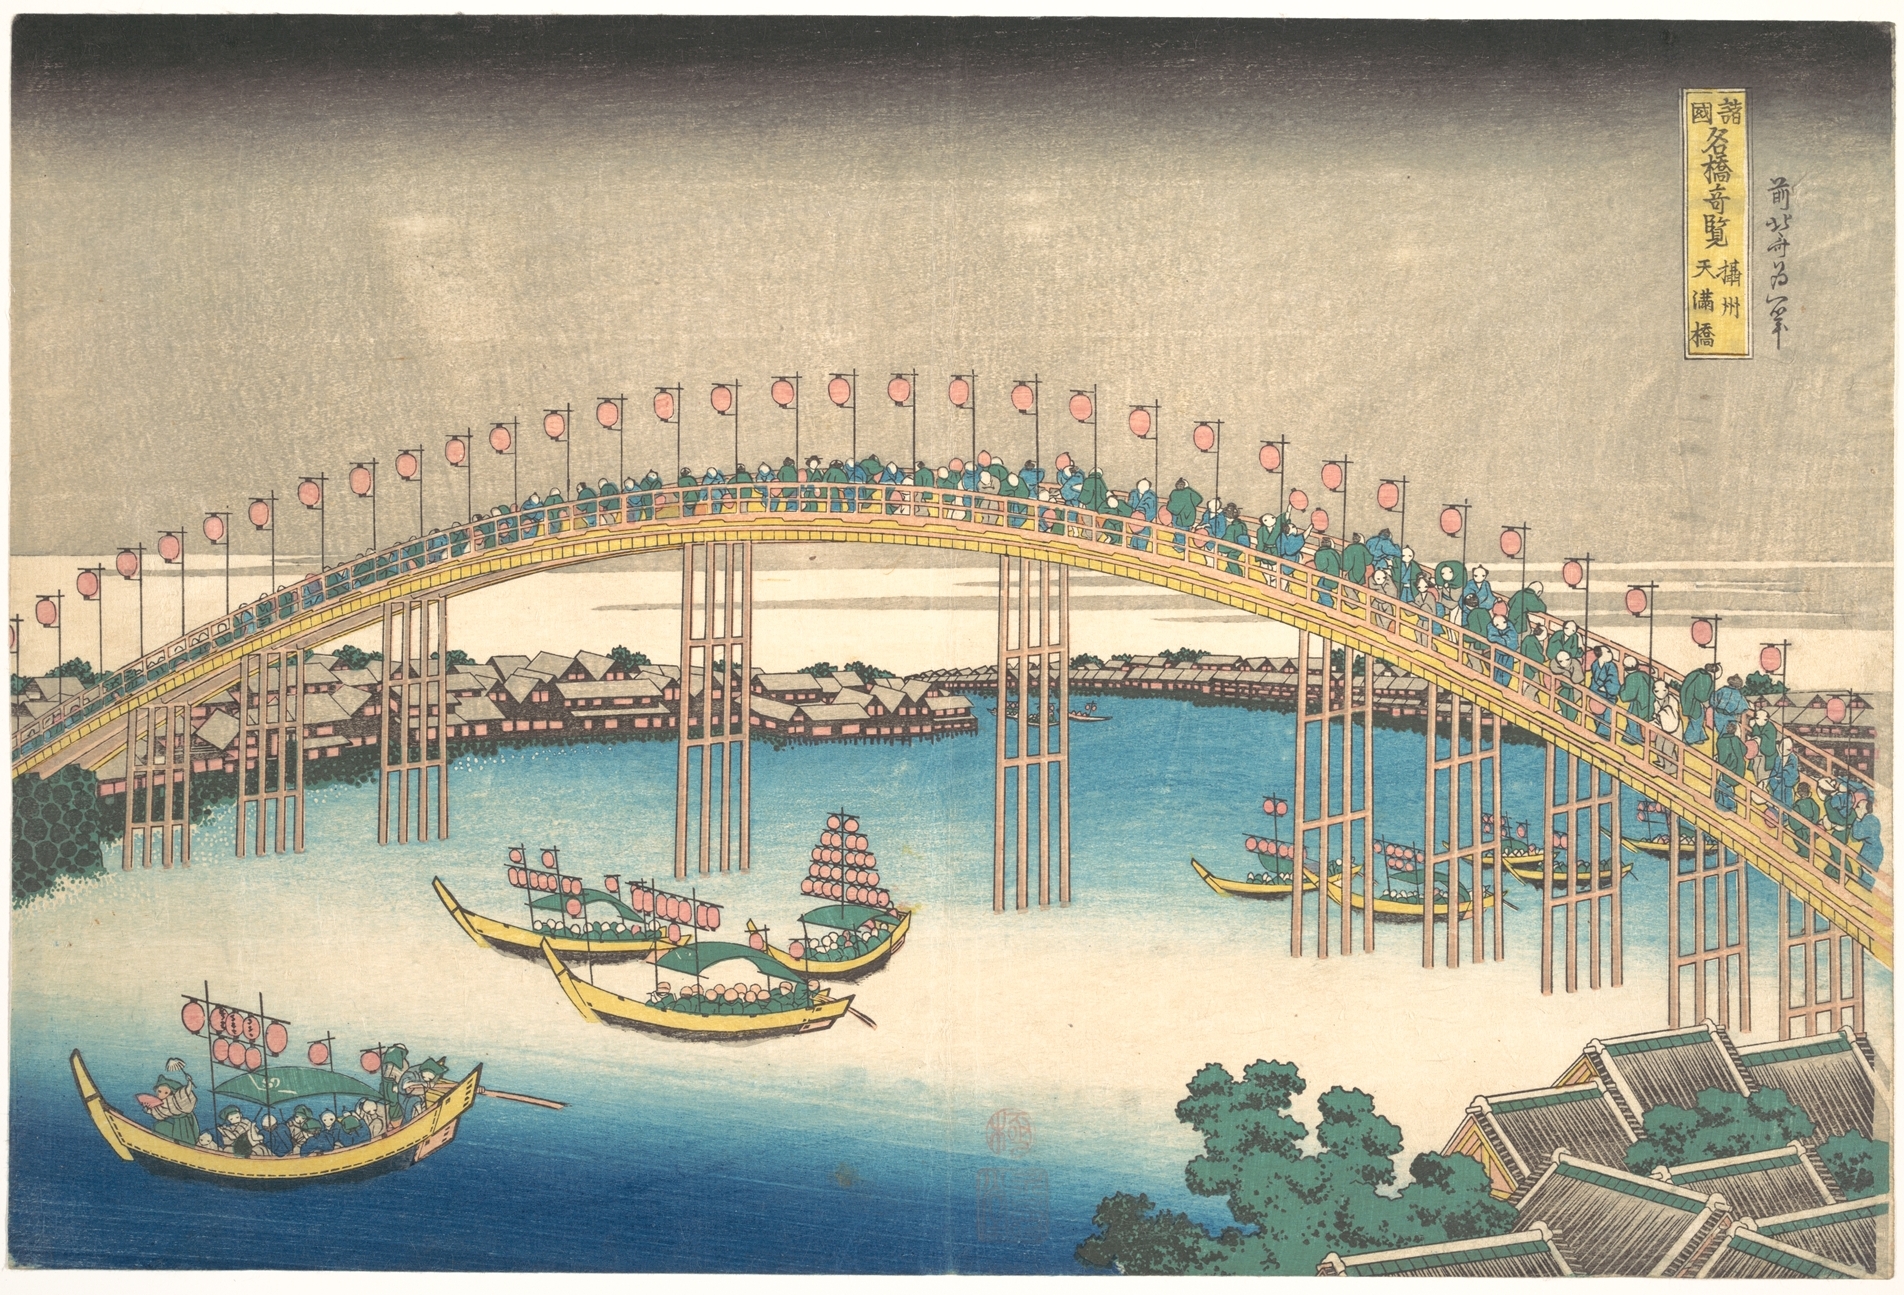 Settsu Eyaletindeki Temma Köprüsü (orig. "Temma Bridge at Settsu Province") by Katsushika Hokusai - 1834 civarı - 24,5 cm (9,6 in); genişlik: 36,9 cm British Museum